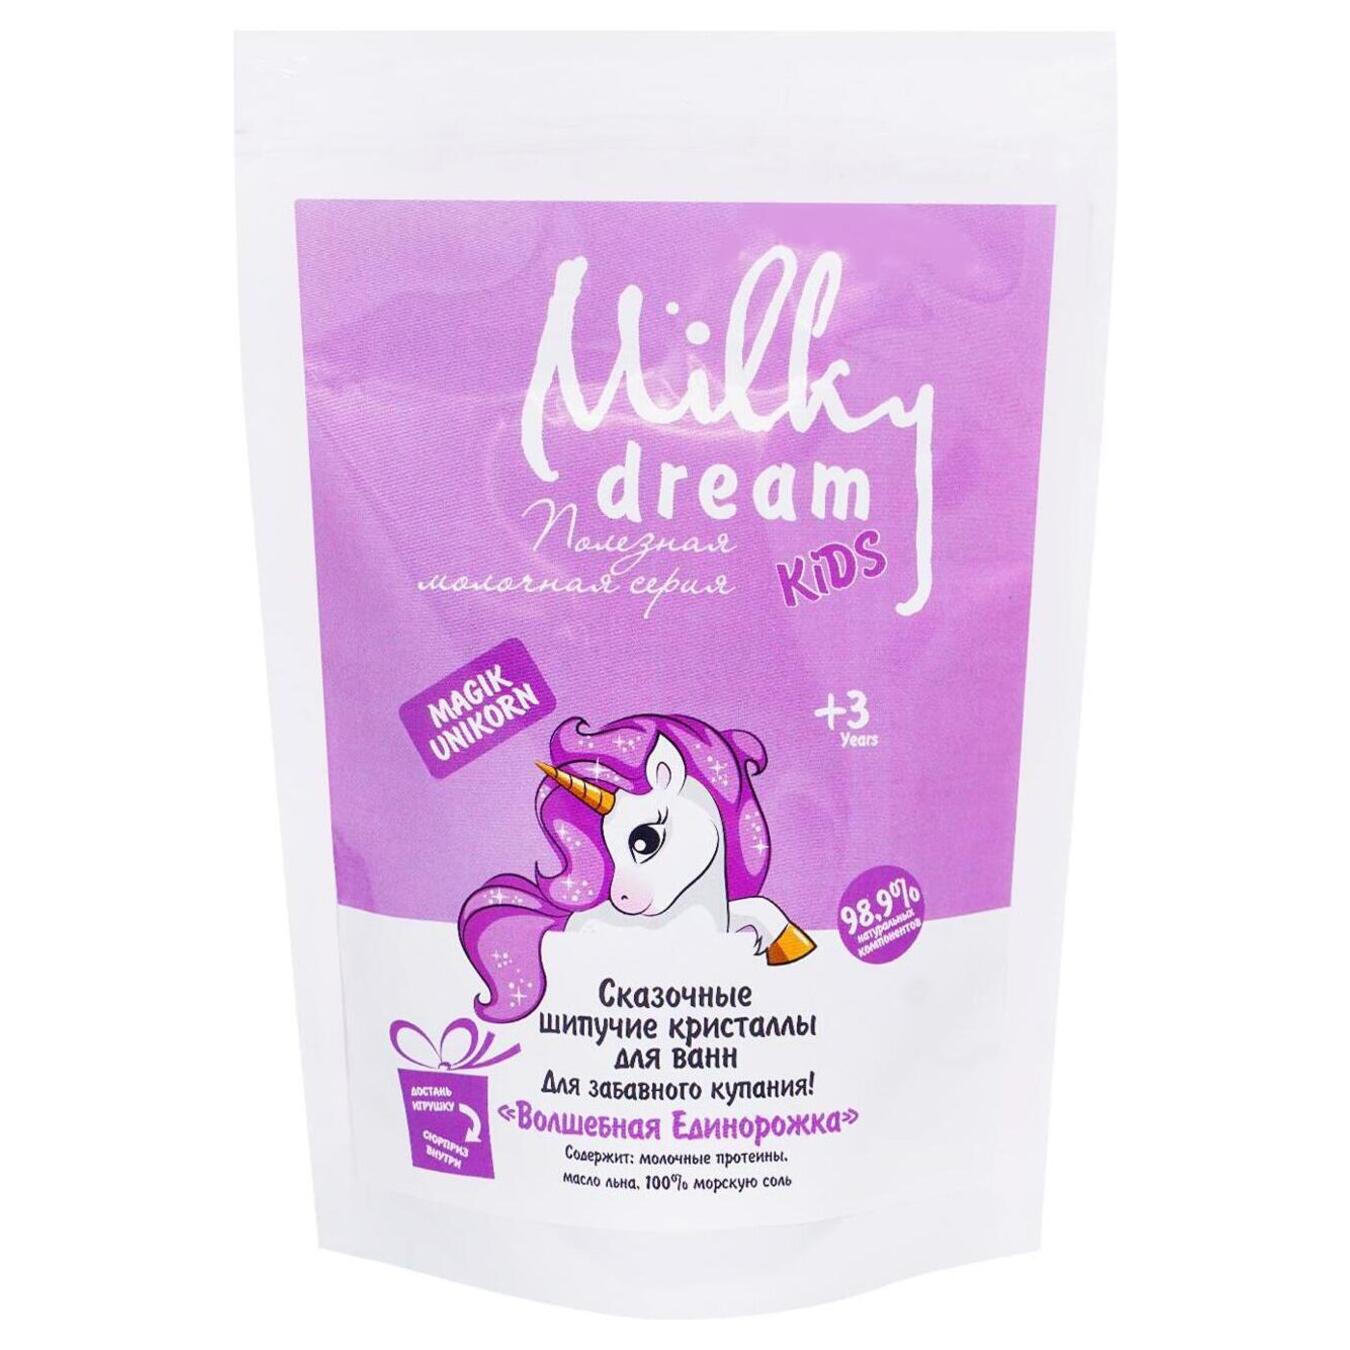 Bath salt Milky Dream children's effervescent crystals magical unicorn doy-pack 300g